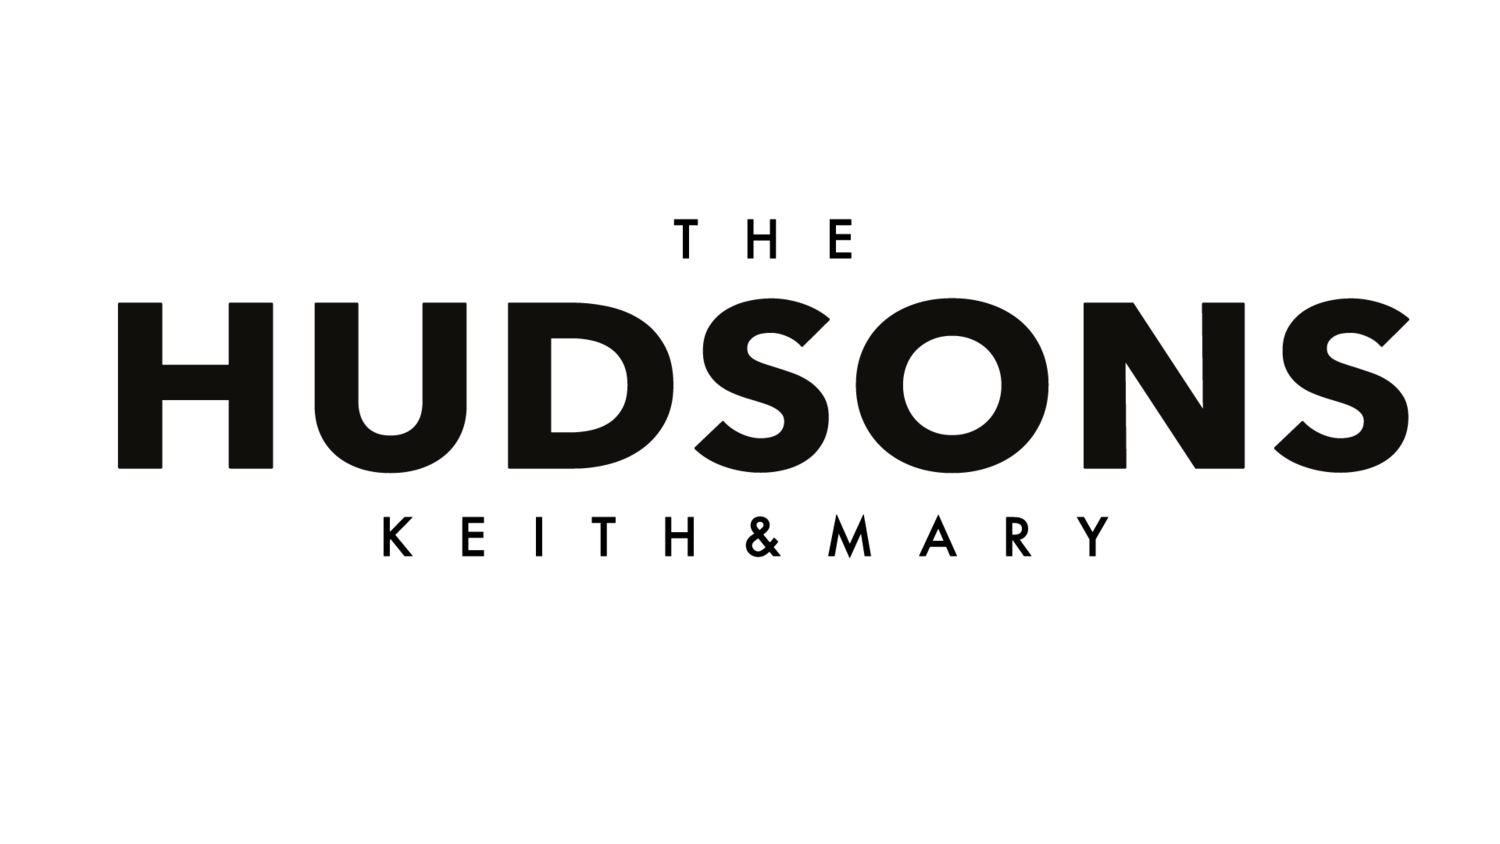 The Hudsons